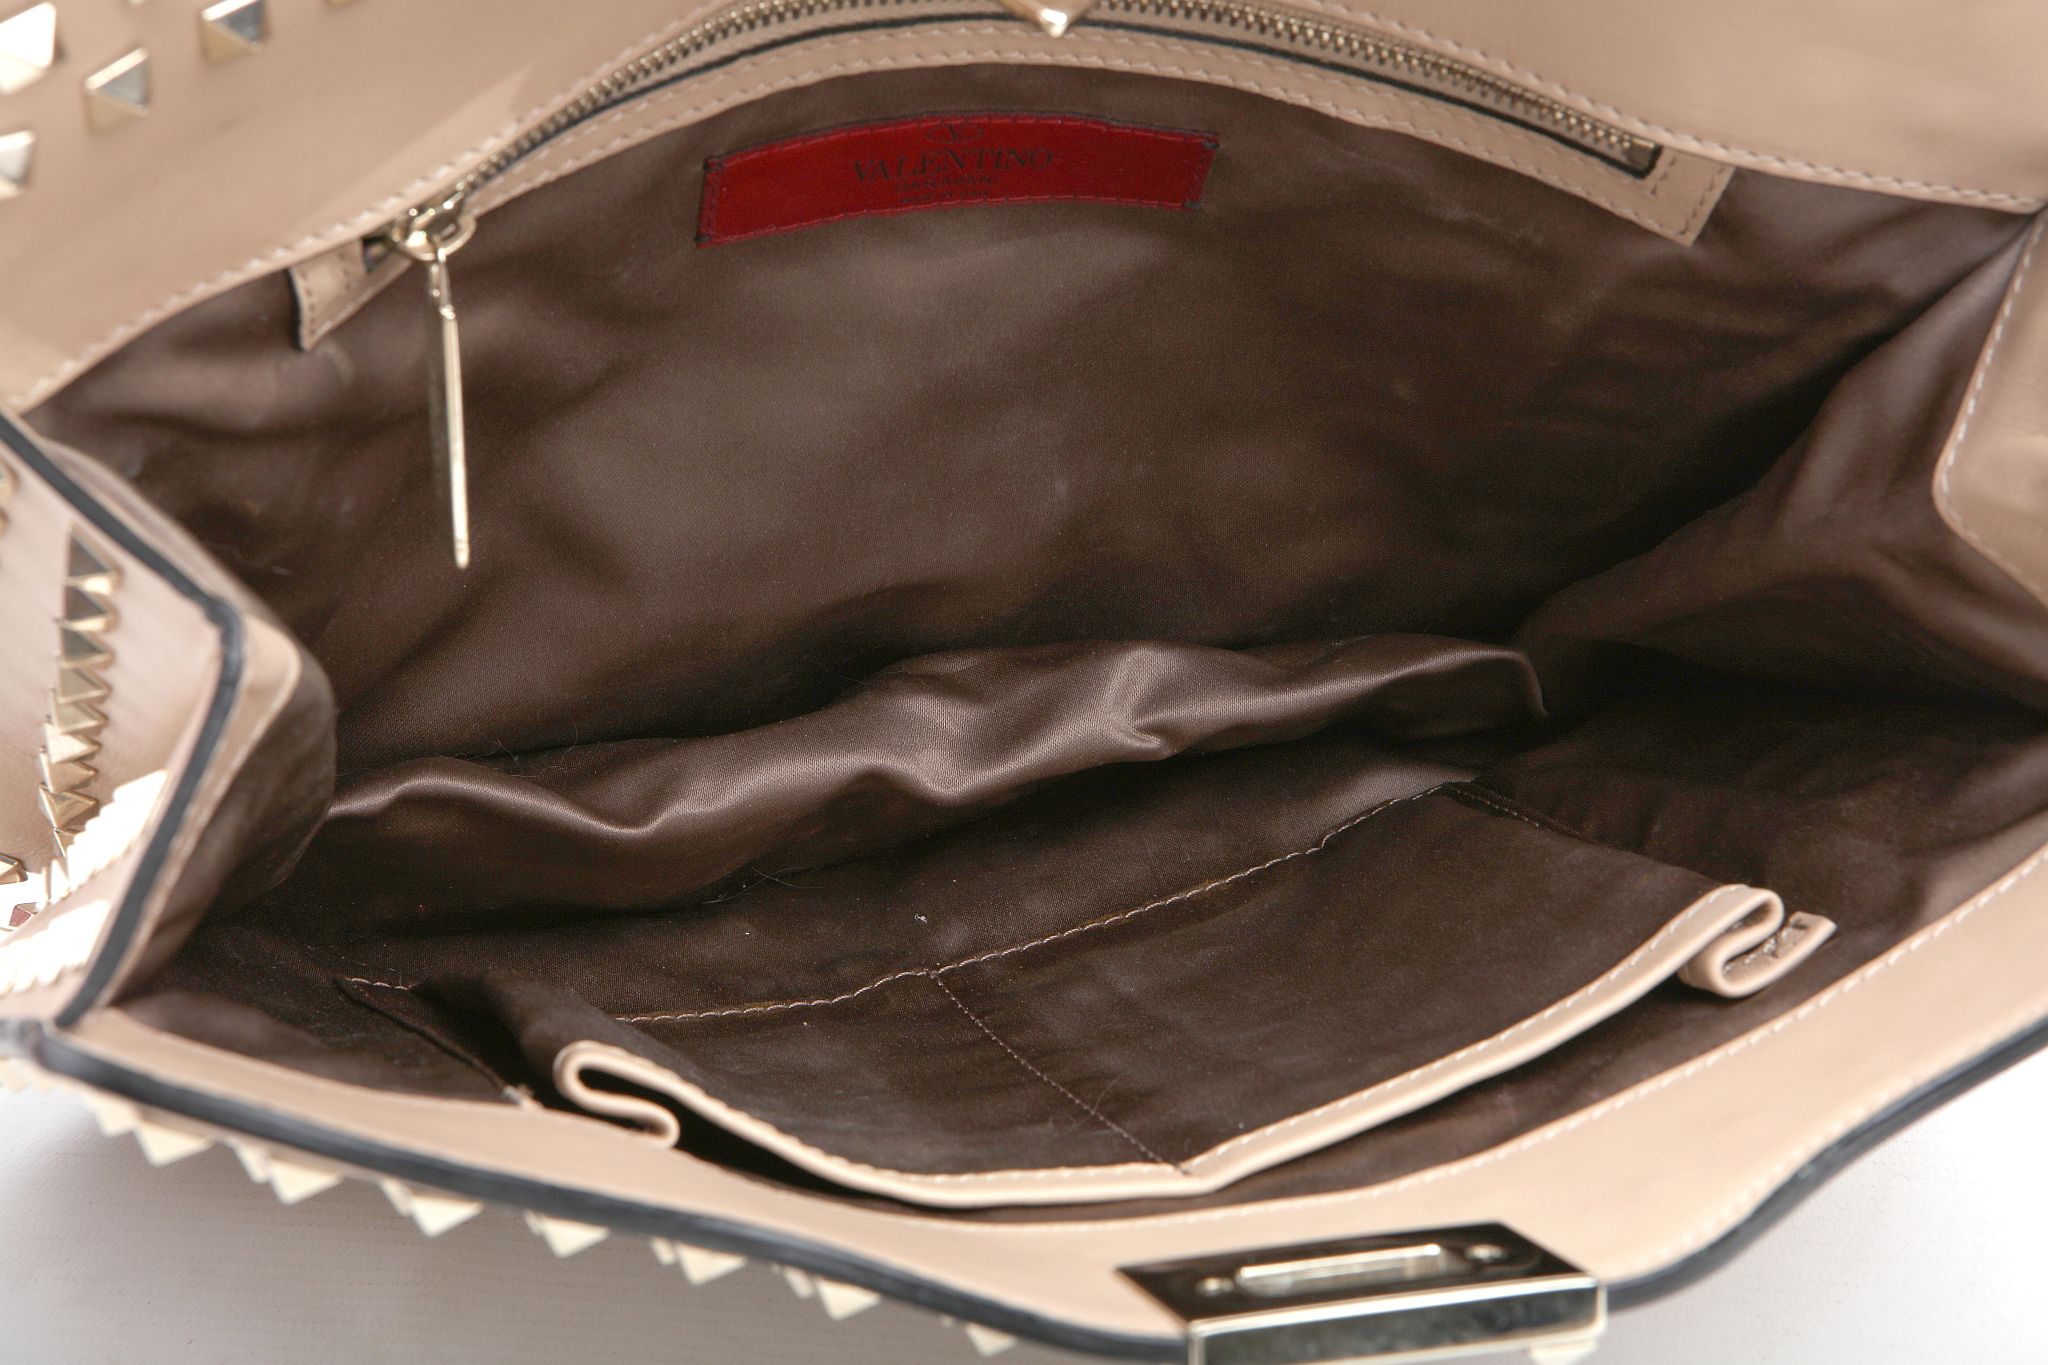 VALENTINO ROCKSTUD SHOULDER BAG, nude leather with all over chrome stud decoration, 32cm wide, - Image 11 of 12